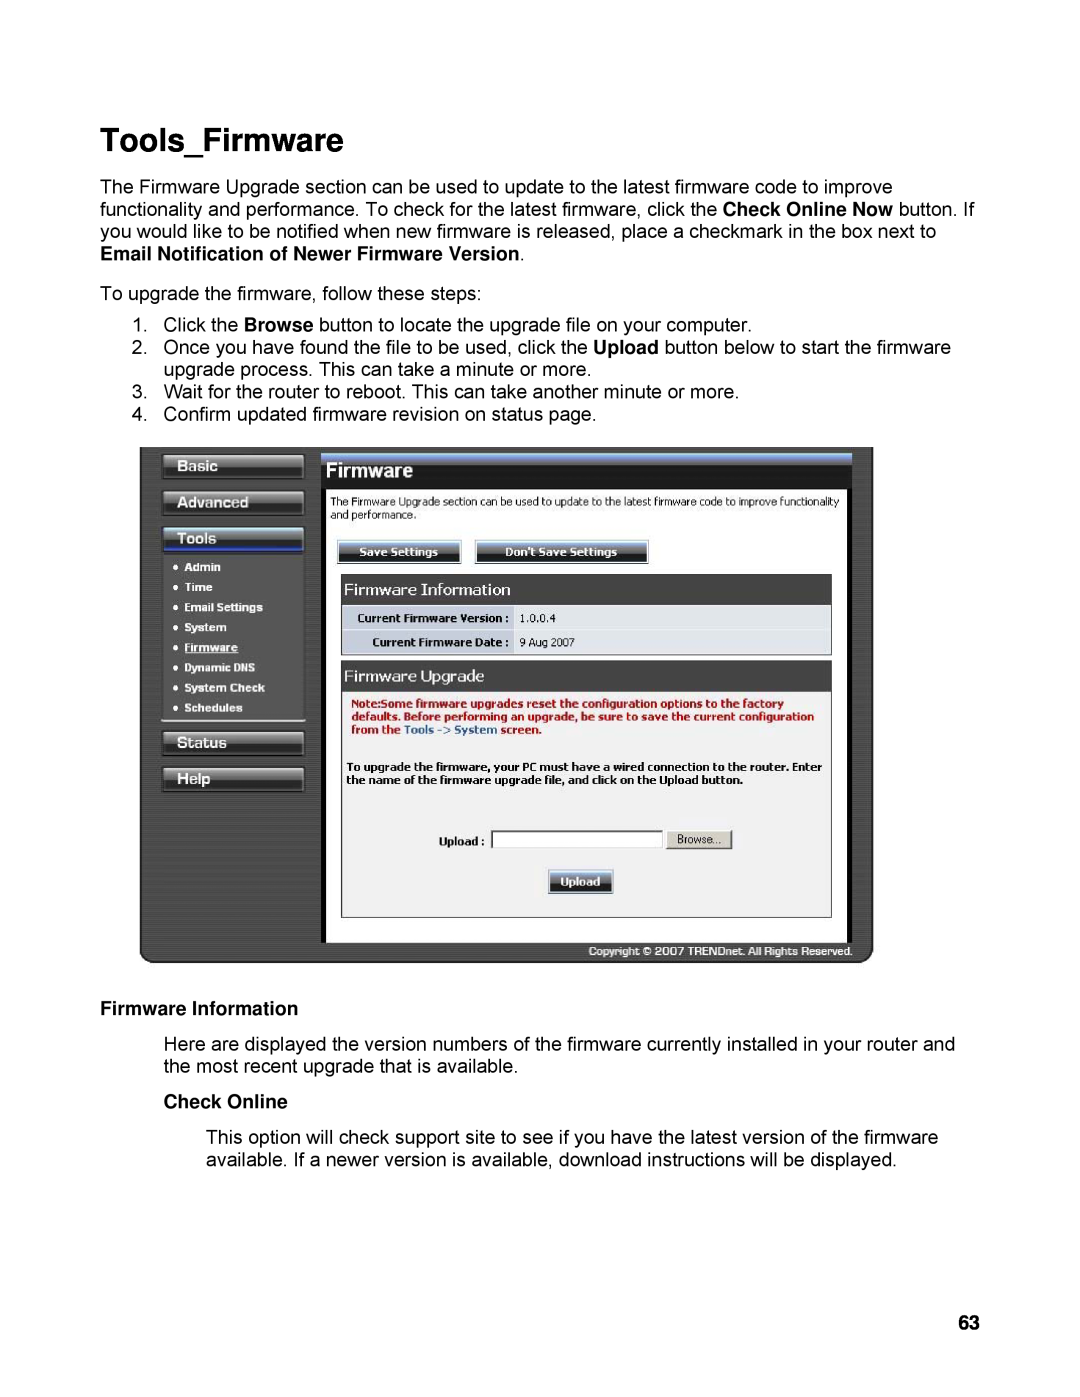 TRENDnet TEW-633GR manual ToolsFirmware, Firmware Information, Check Online 